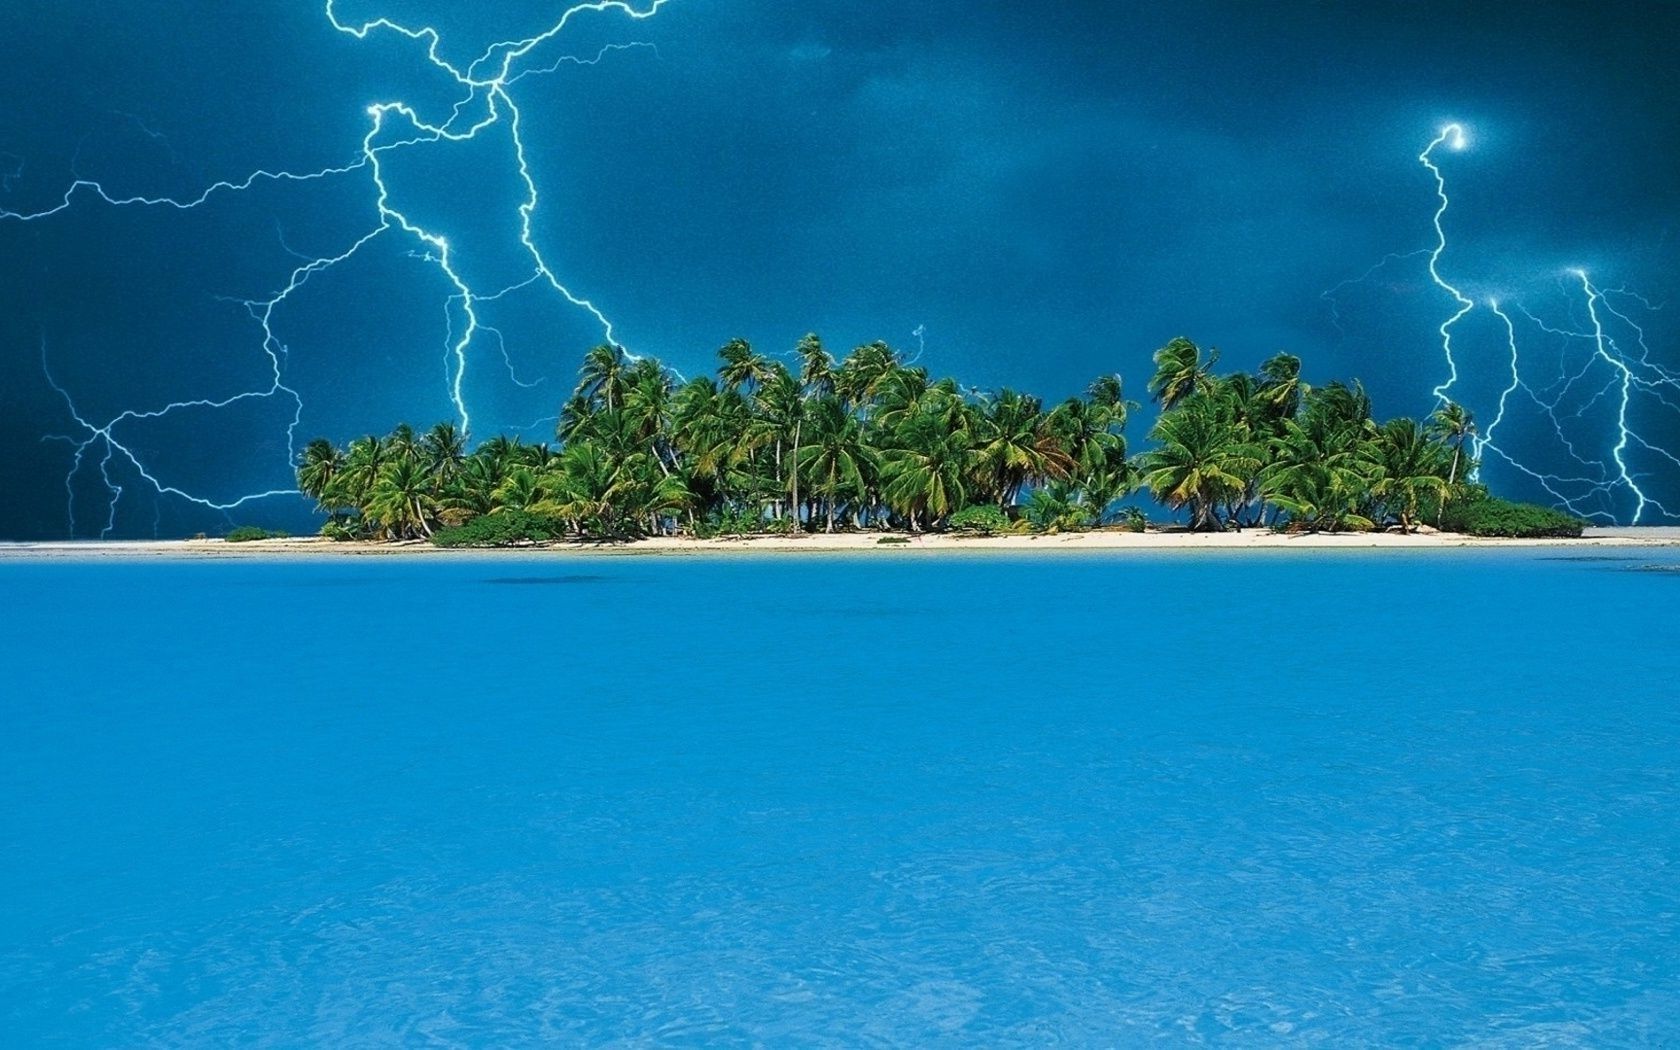 Water lightning the island storm